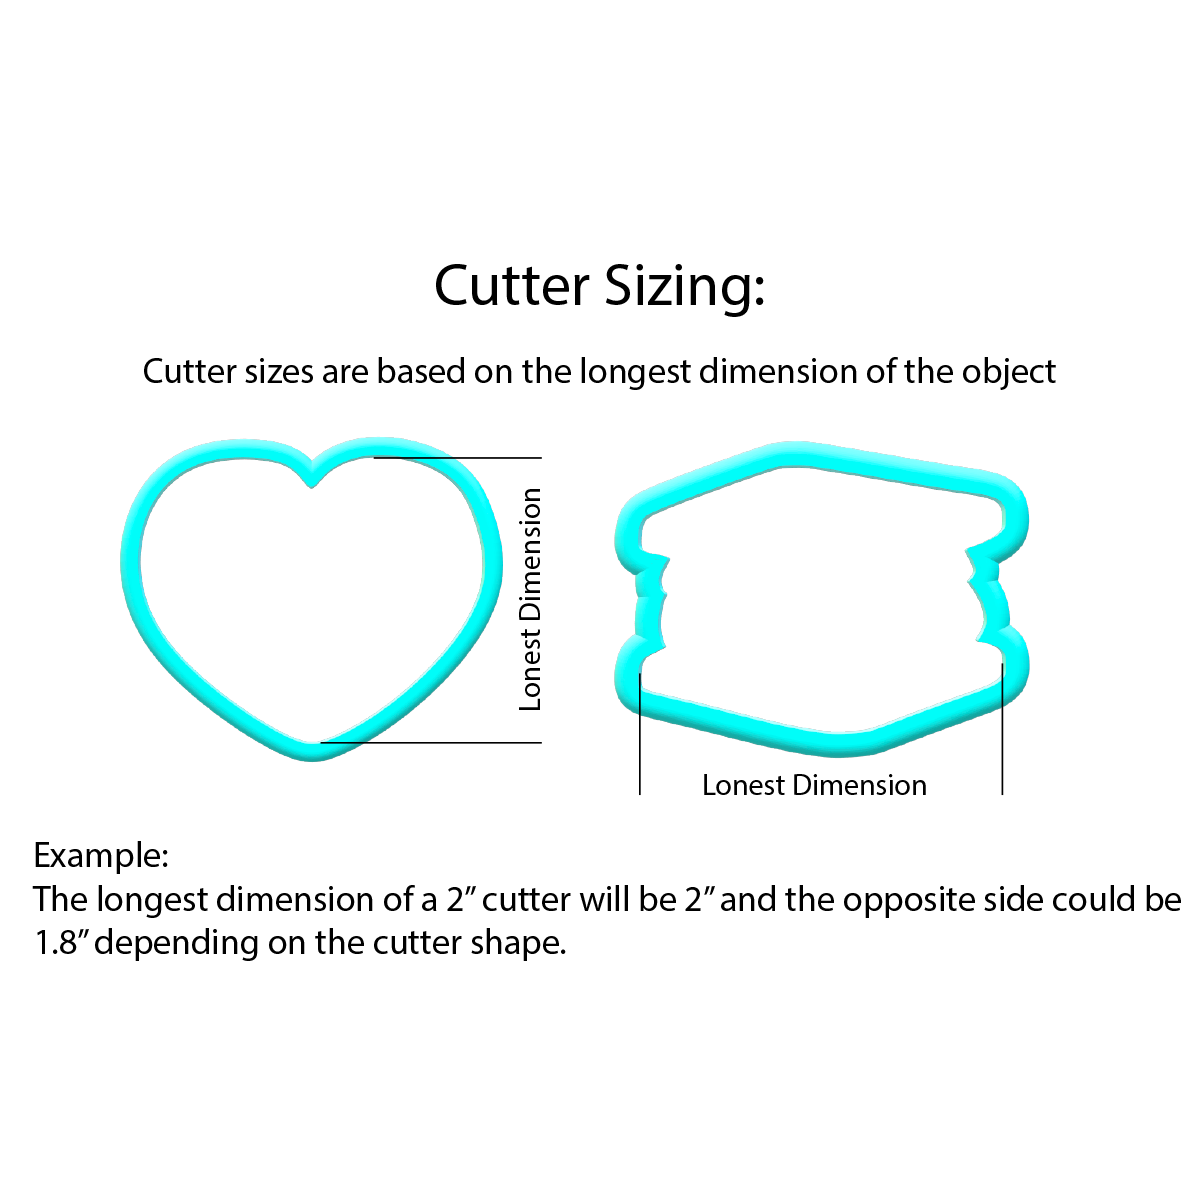 Heart Sunglasses Cookie Cutters | Standard & Imprint Cutters Included | STL Files